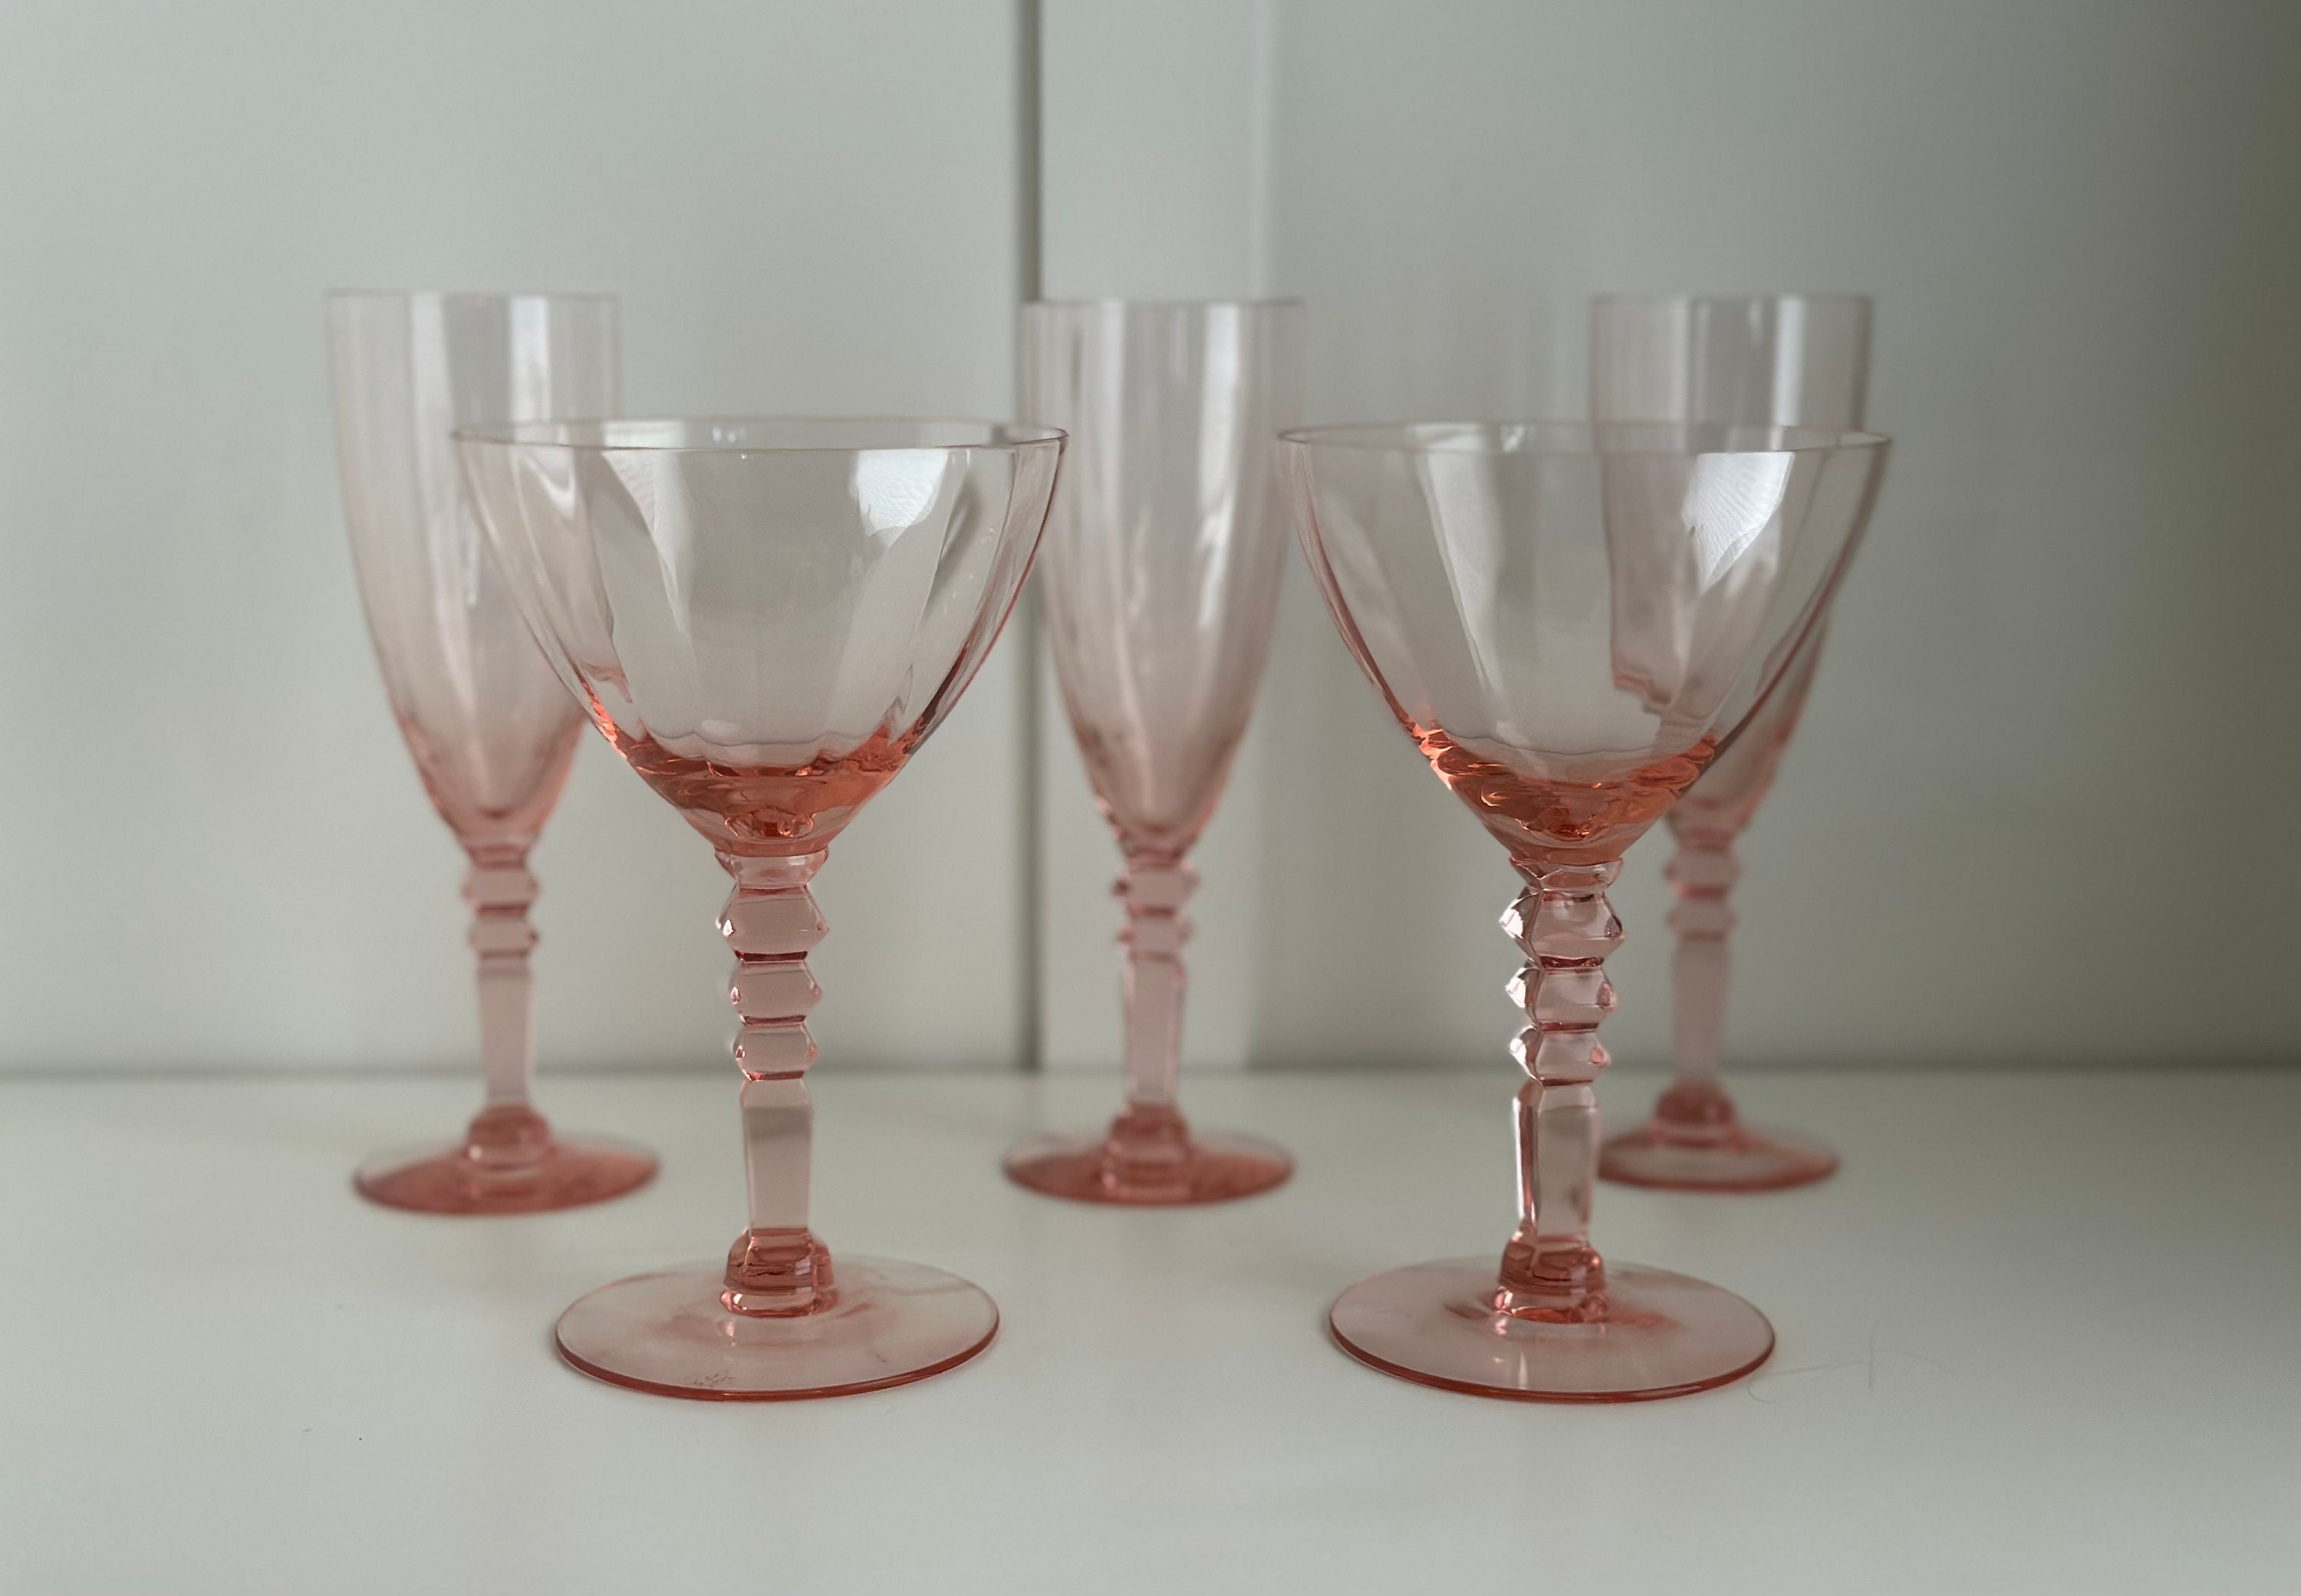 Pink Vintage Textured Drinking Glass - 13 oz. – Mellow Monkey